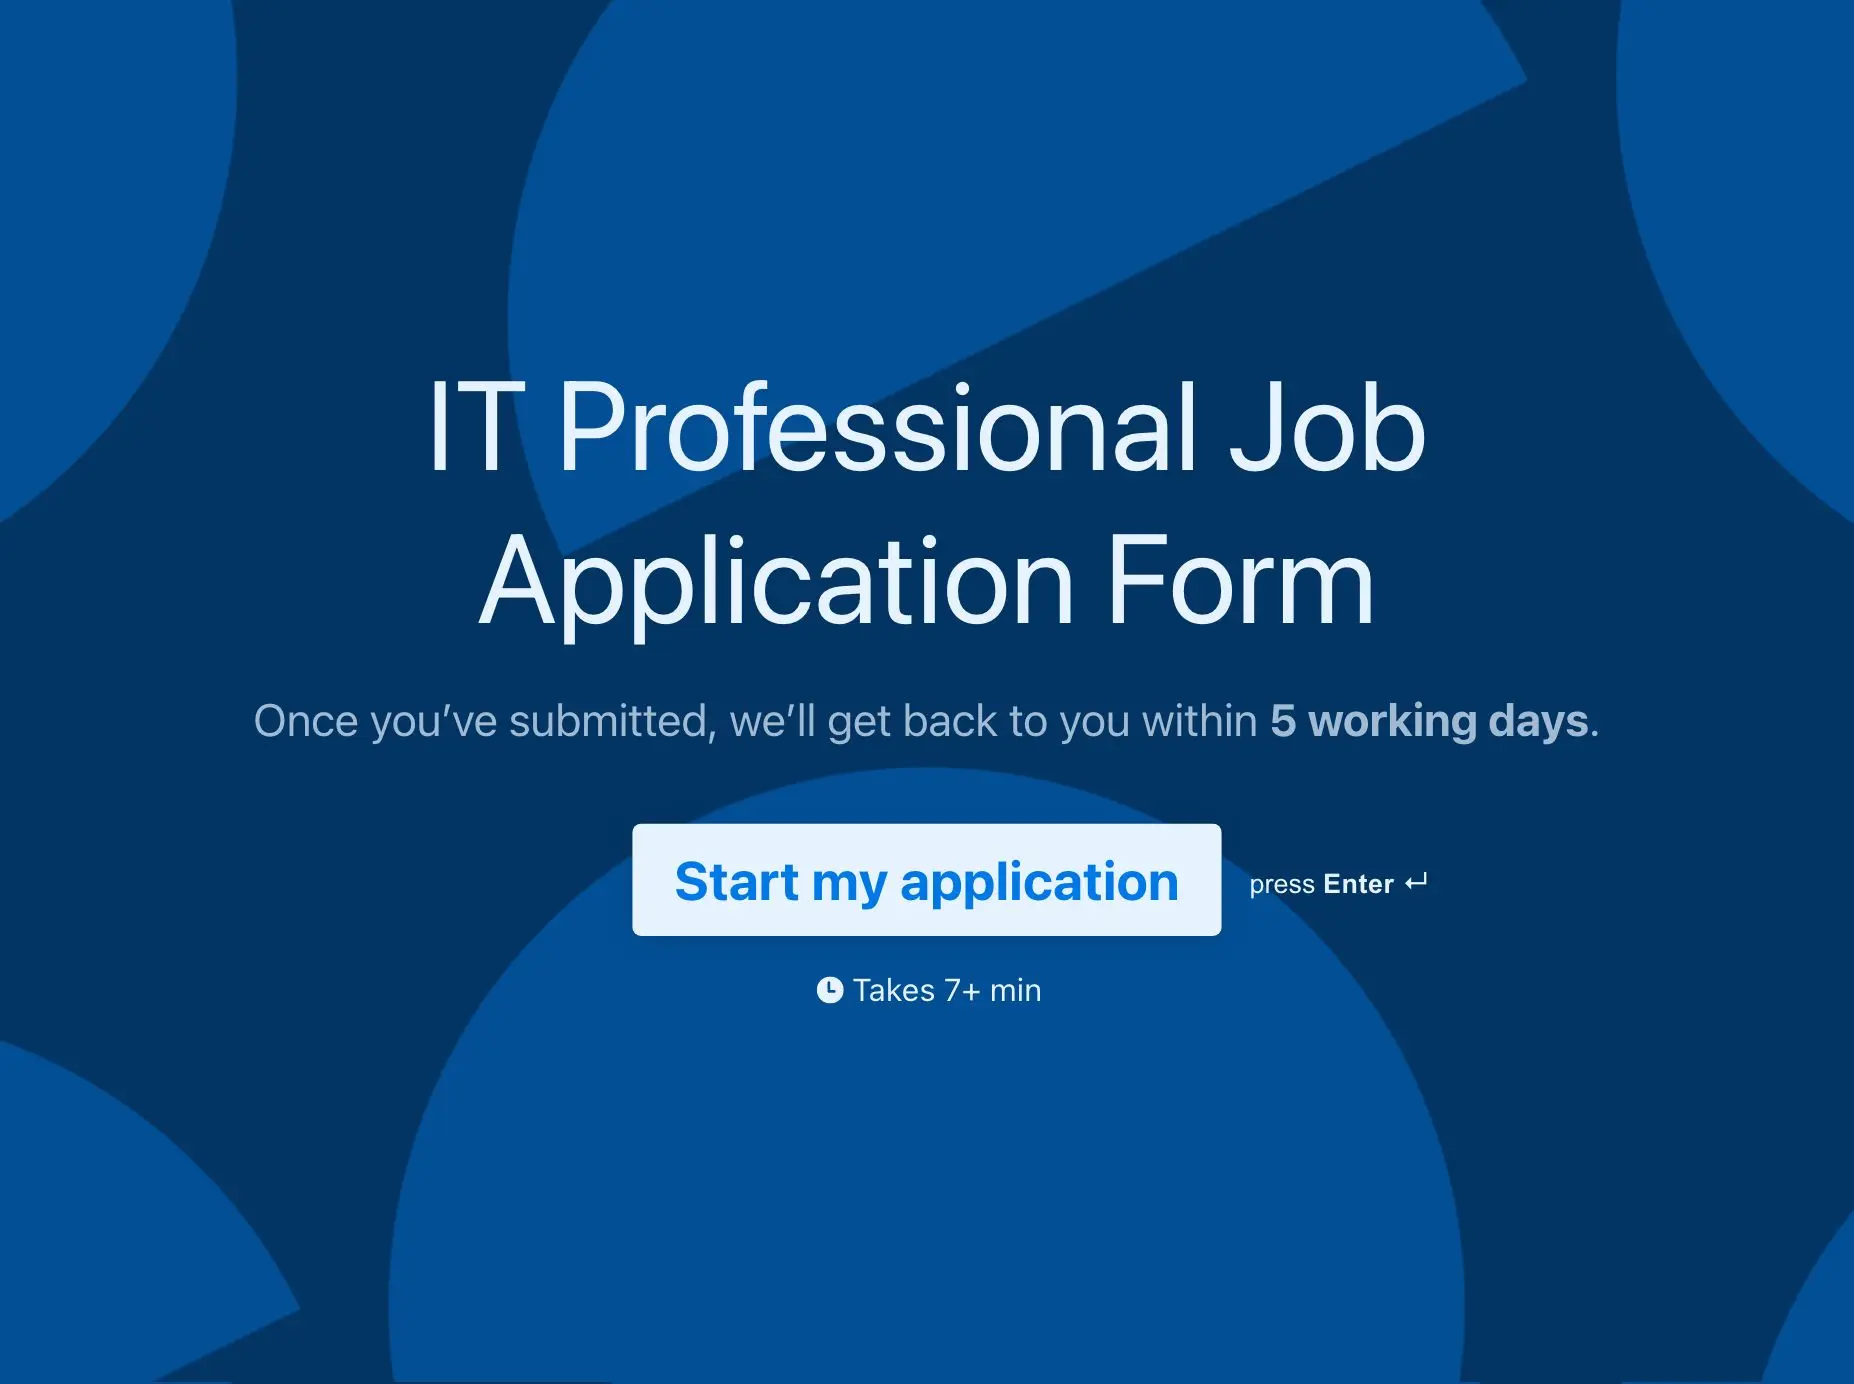 IT Professional Job Application Form Template Hero